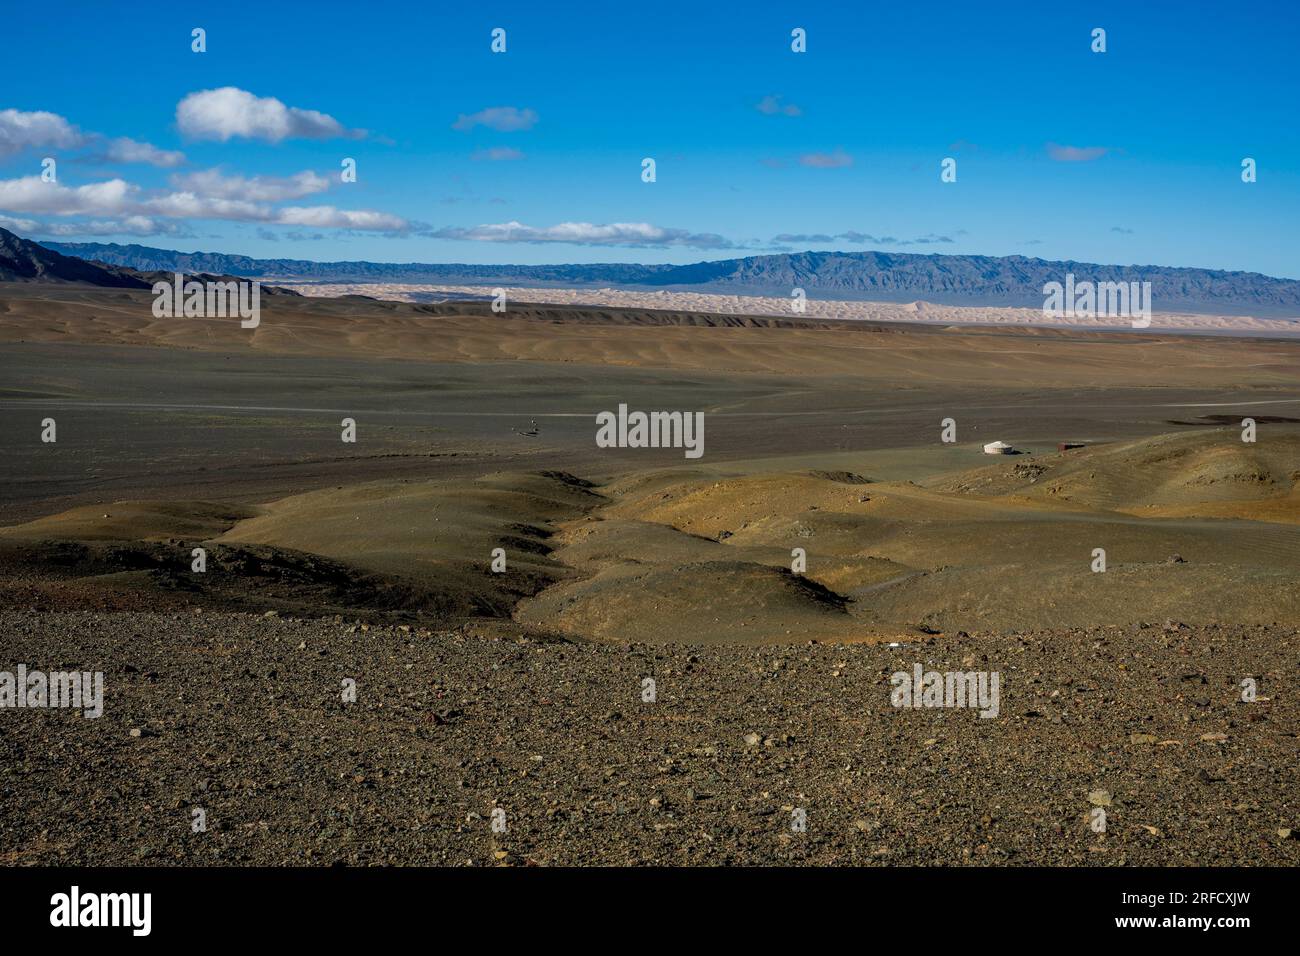 Vista delle dune di sabbia di Hongoryn Els (Khongoryn Els) nel deserto del Gobi, nel Parco nazionale Gobi Gurvansaikhan, nella Mongolia meridionale. Foto Stock